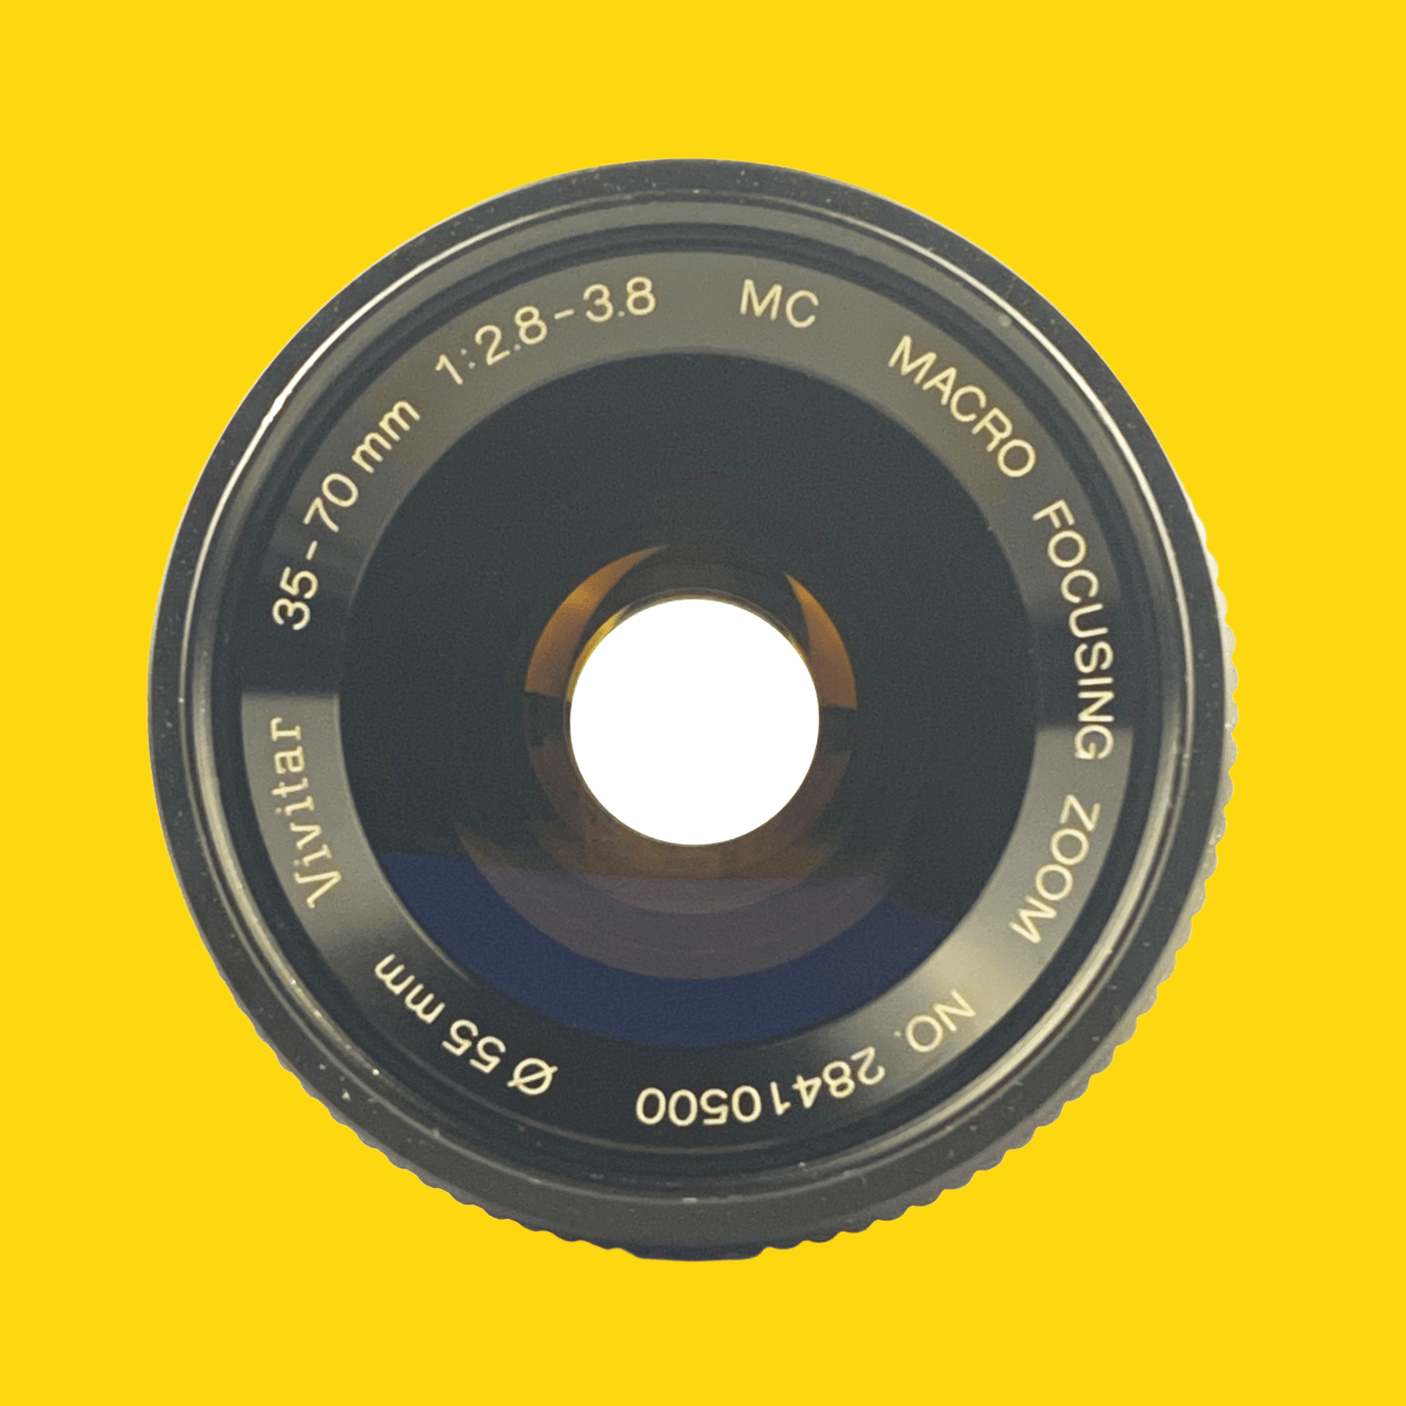 Vivitar Macro 35mm f/3.8 Multi Coated Camera Lens